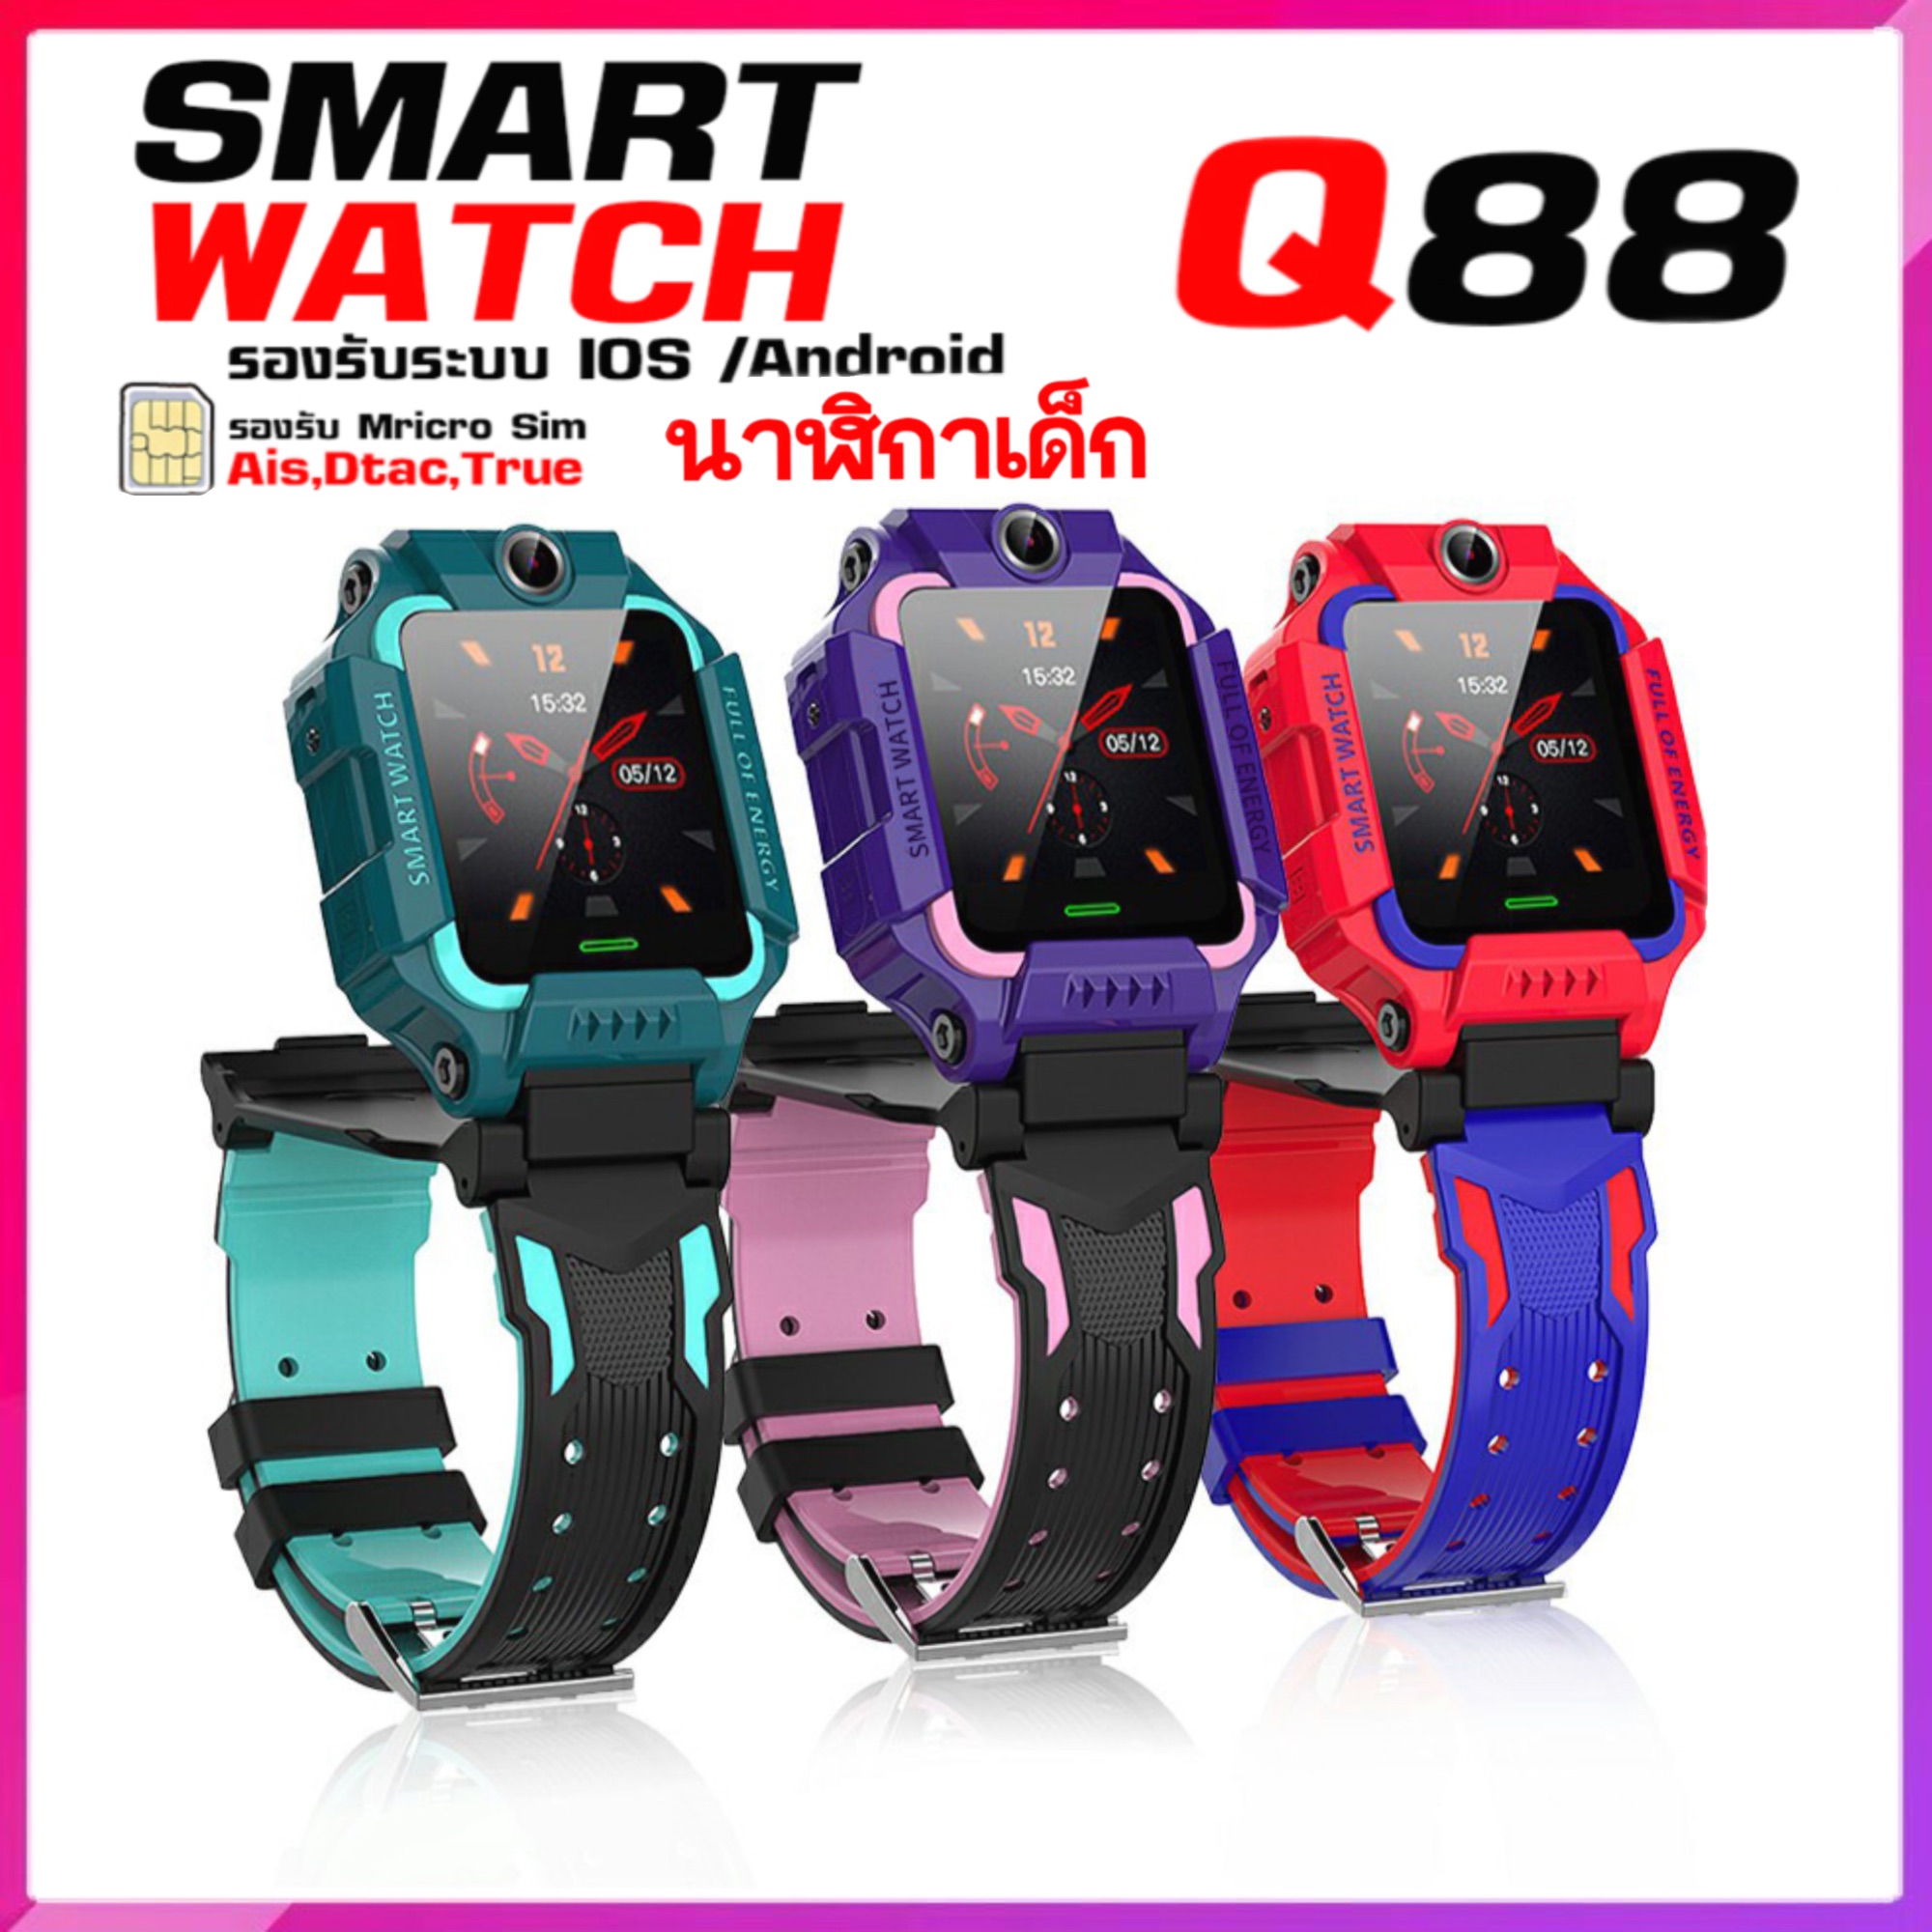 smartwatch นาฬิกาไอโม่ นาฬิกาไอโม่รุ่นQ88  ยกจอพับได้ จอหมุนได้ นาฬิกาเด็ก นาฬิกาอัจฉริยะ นาฬิกาโทรได้ เมนูภาษาไทย